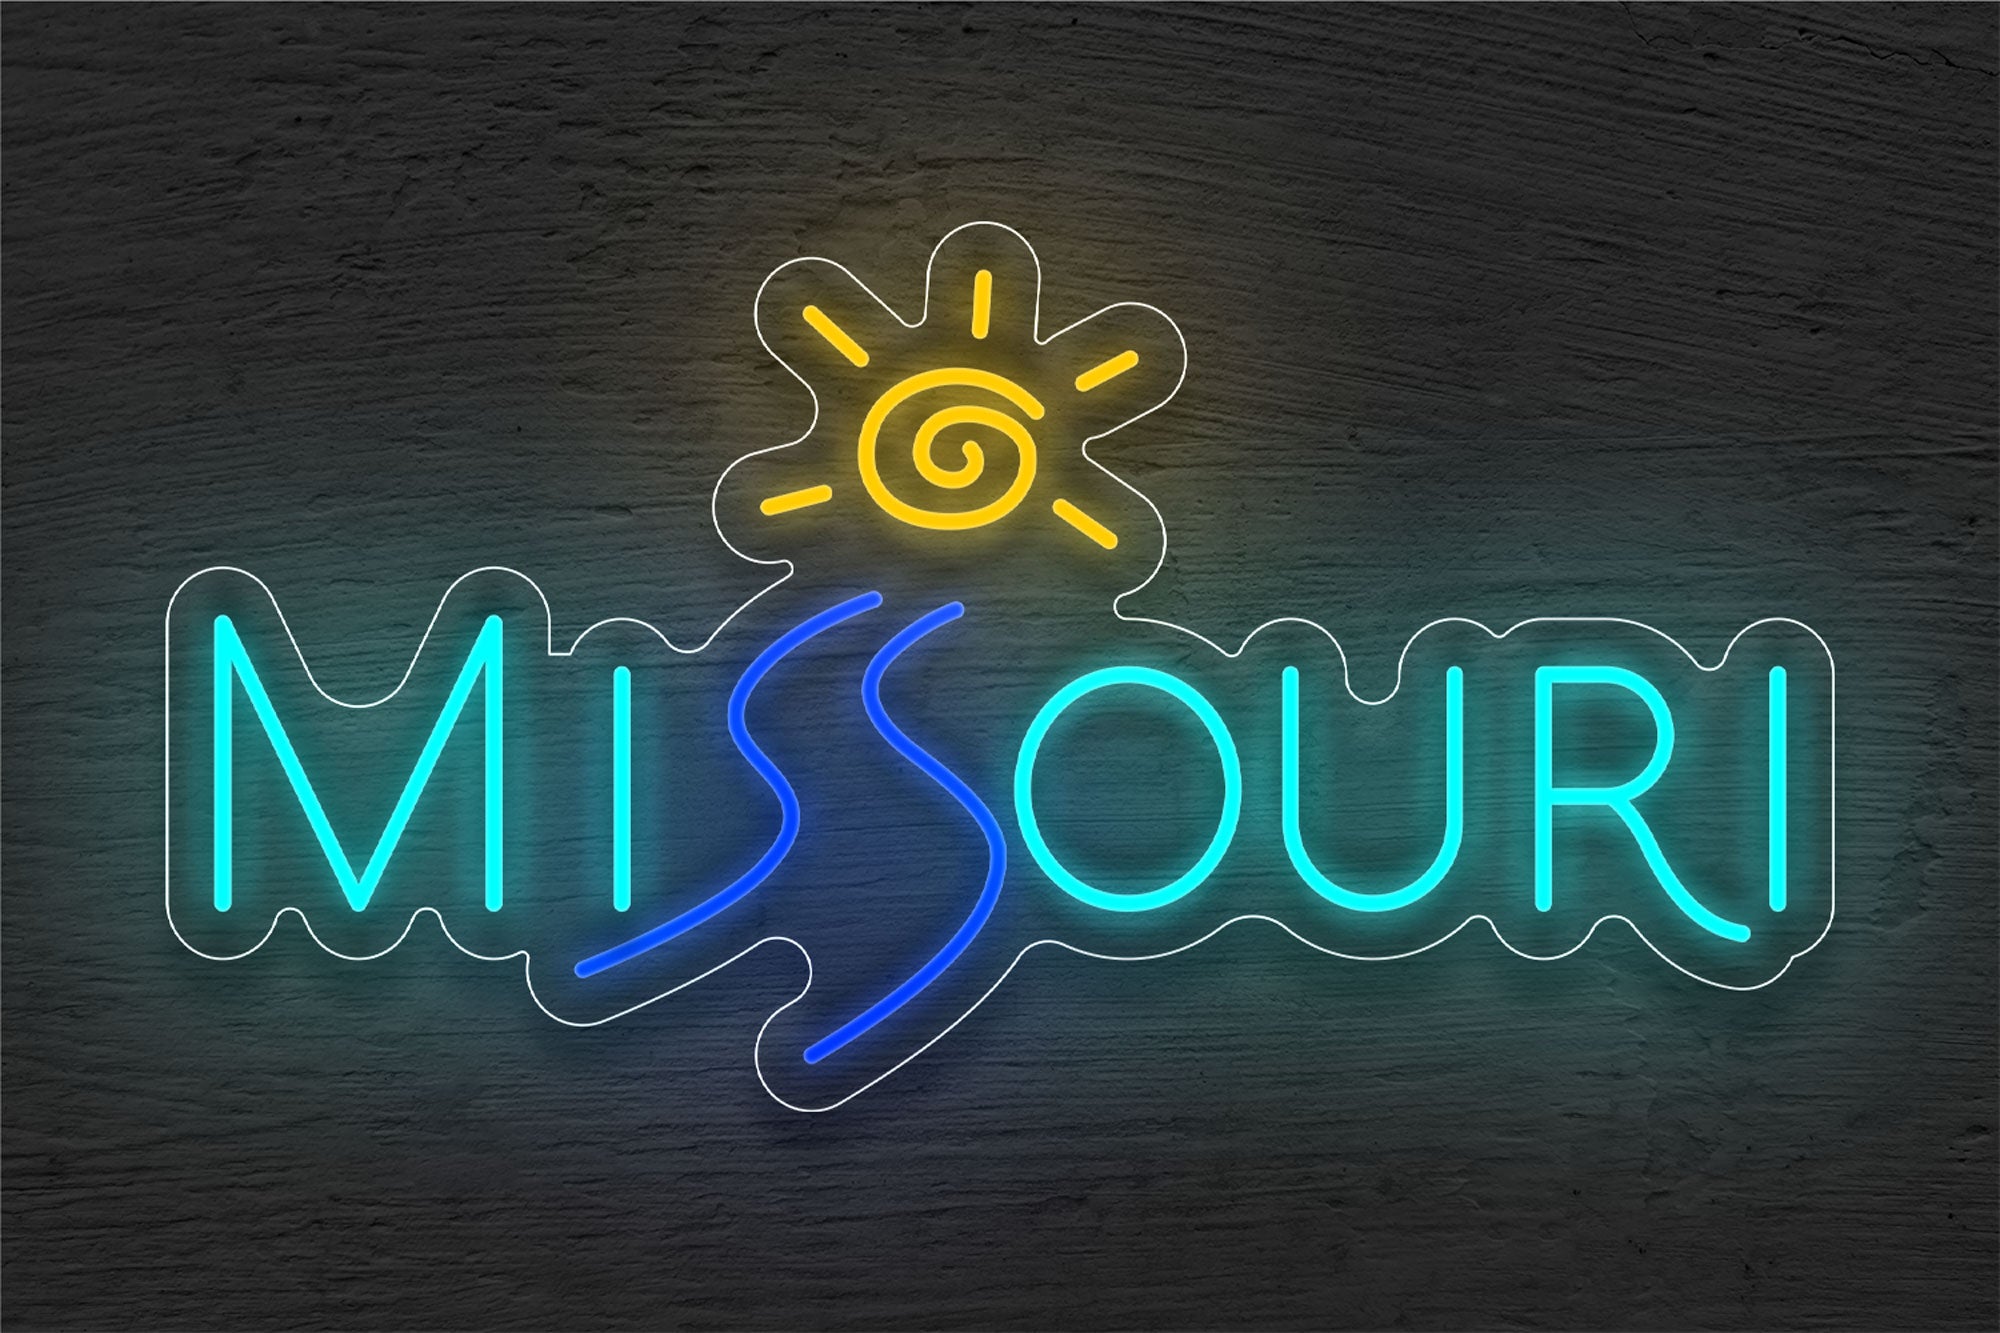 Missouri with Logo LED Neon Sign